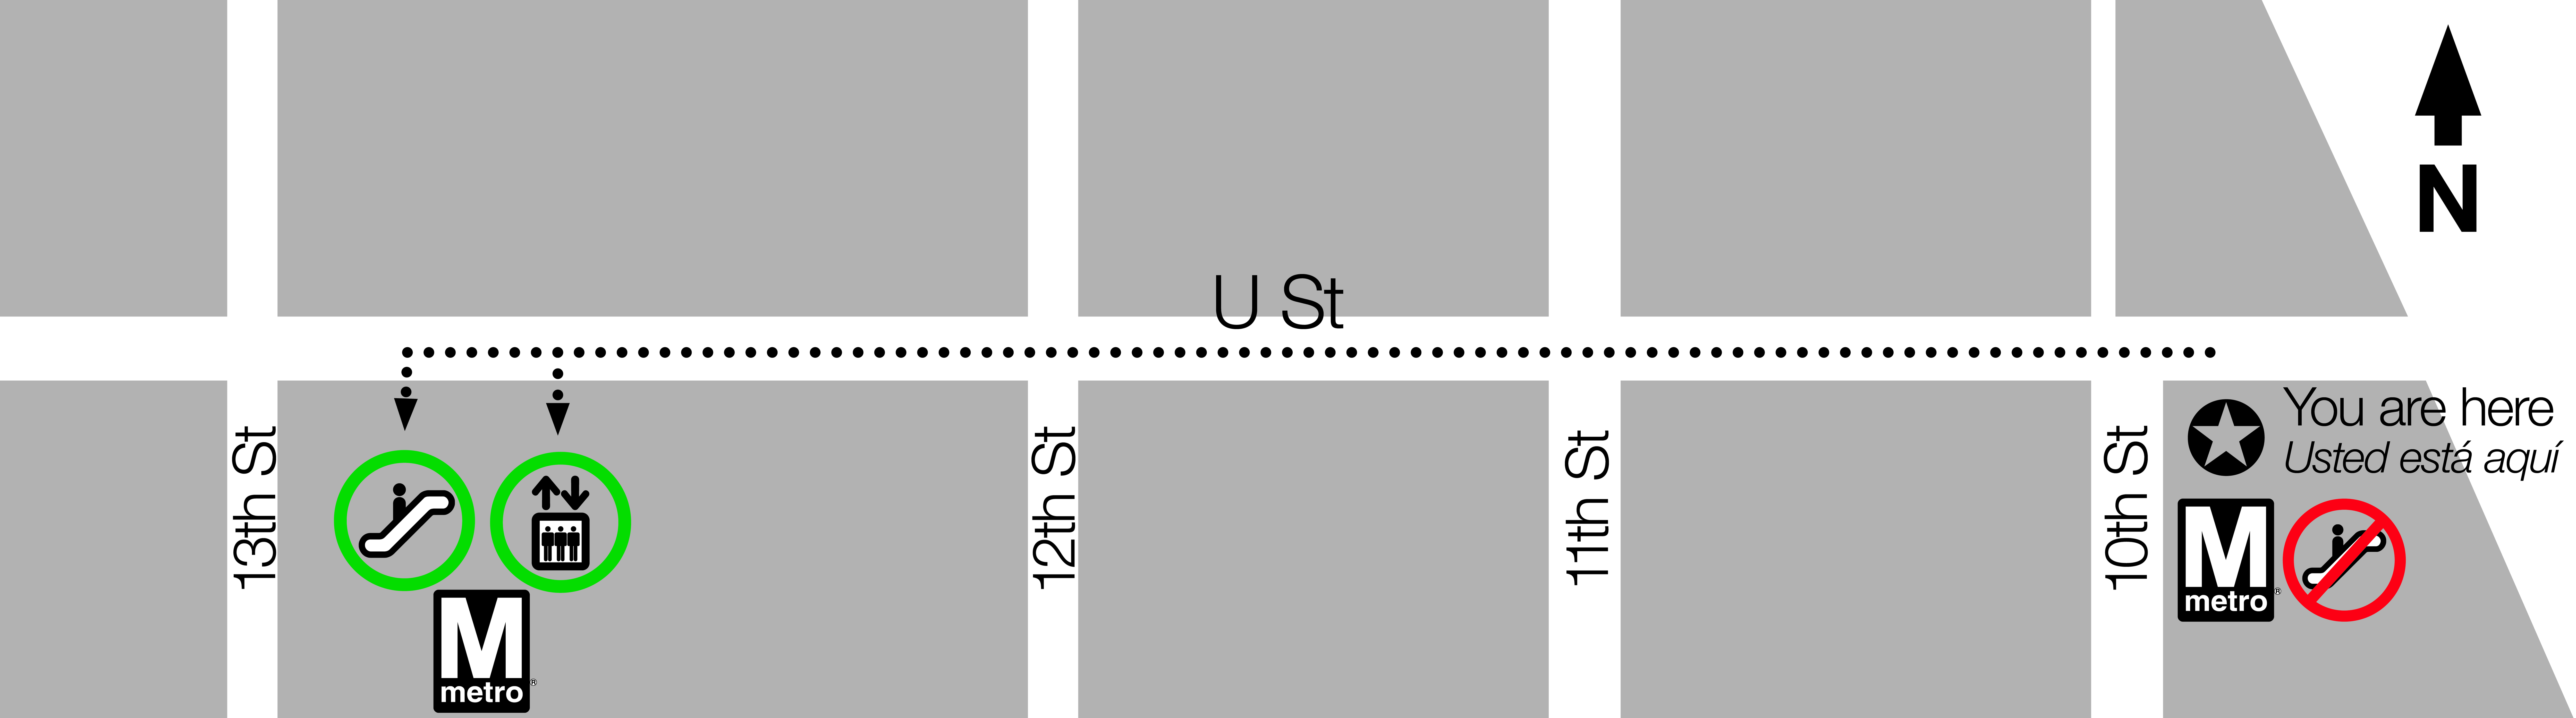 10th and U St. Escalator Map v2